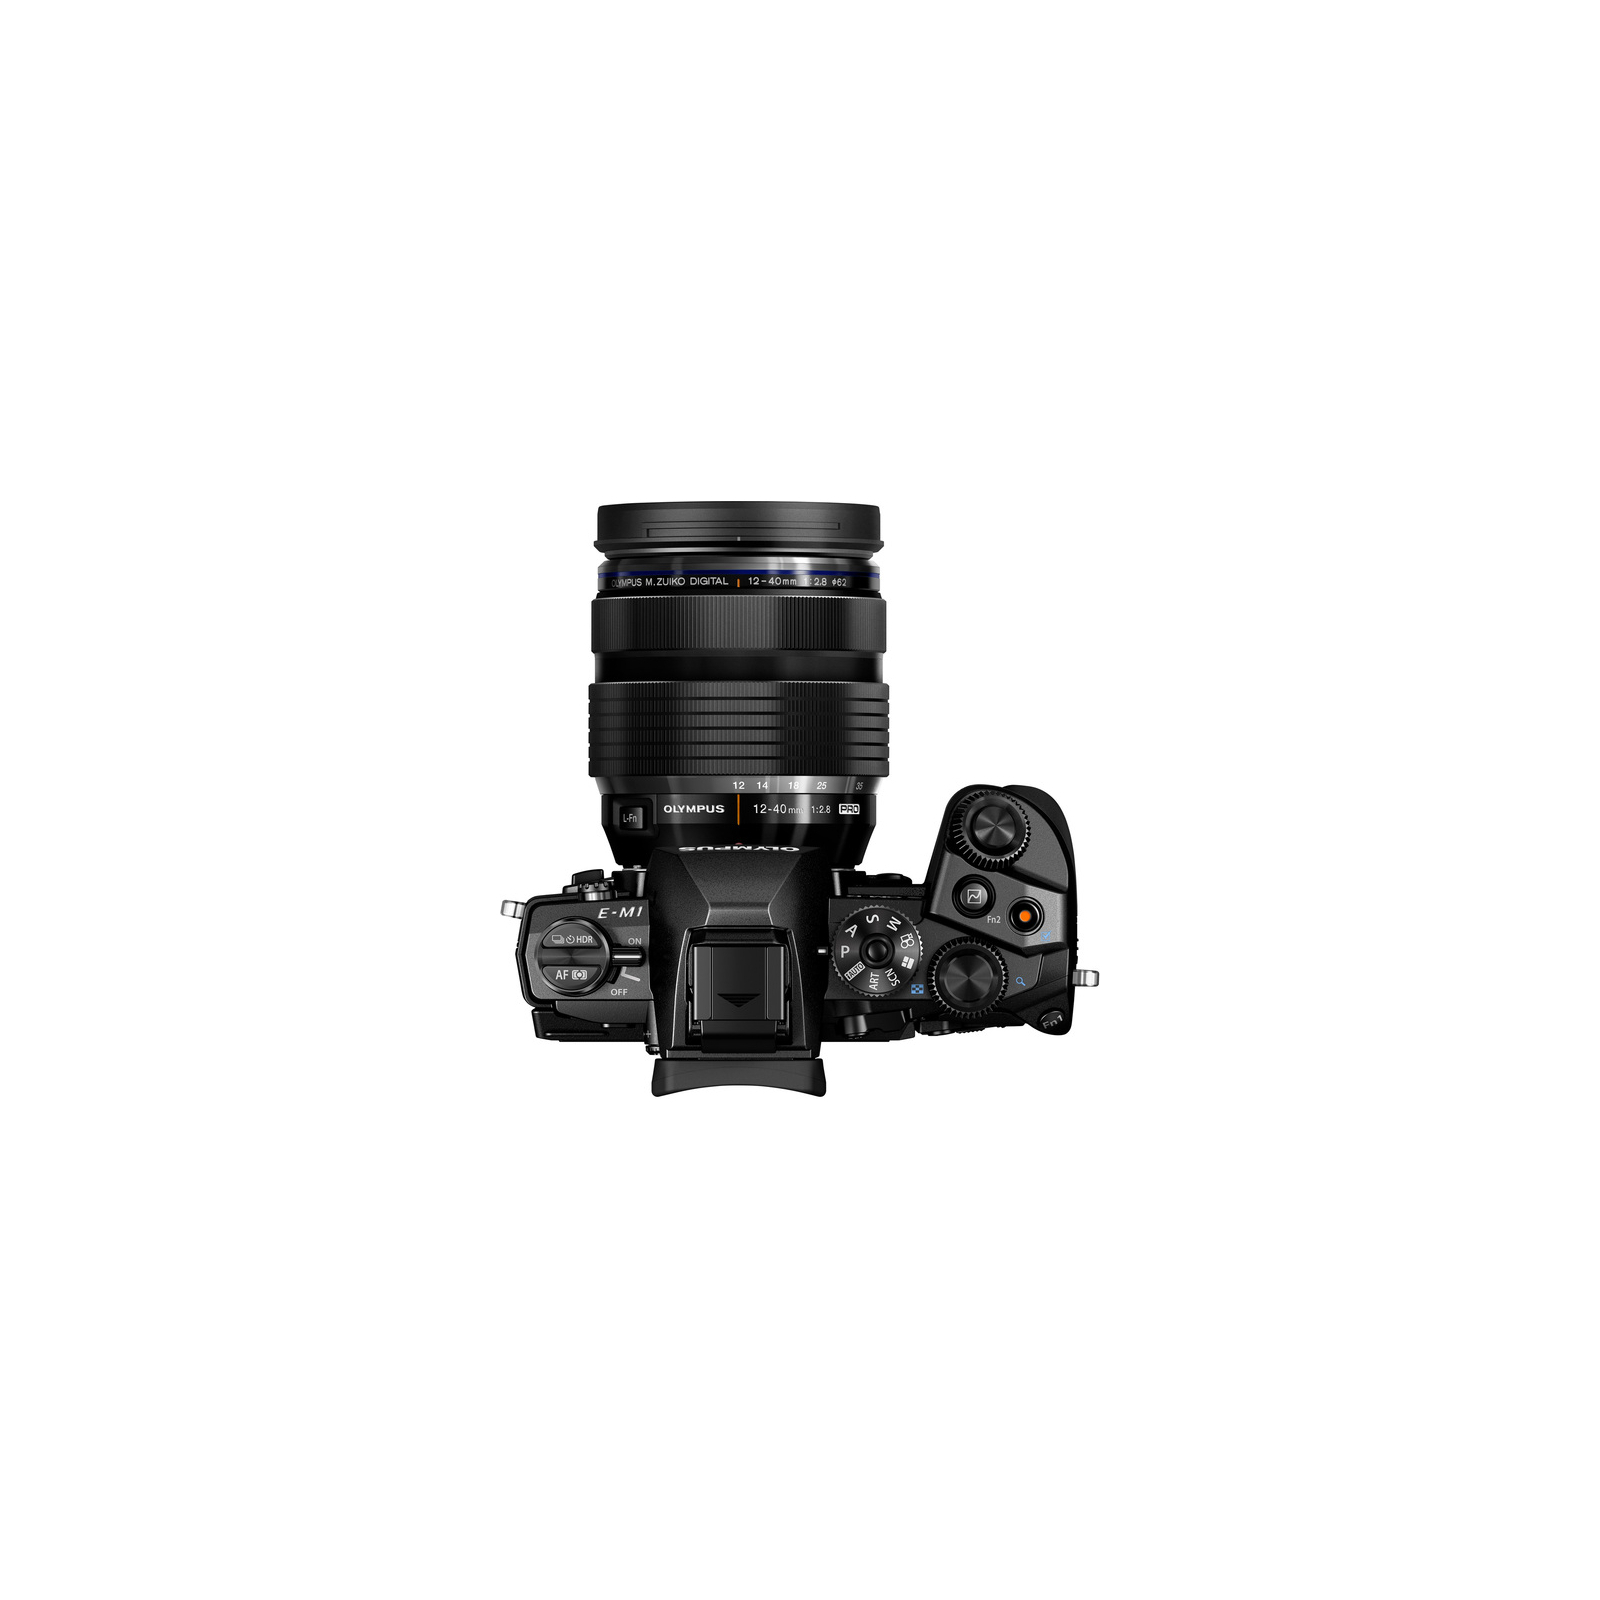 Цифровой фотоаппарат Olympus E-M1 12-40 Kit black/black (V207017BE000) изображение 7